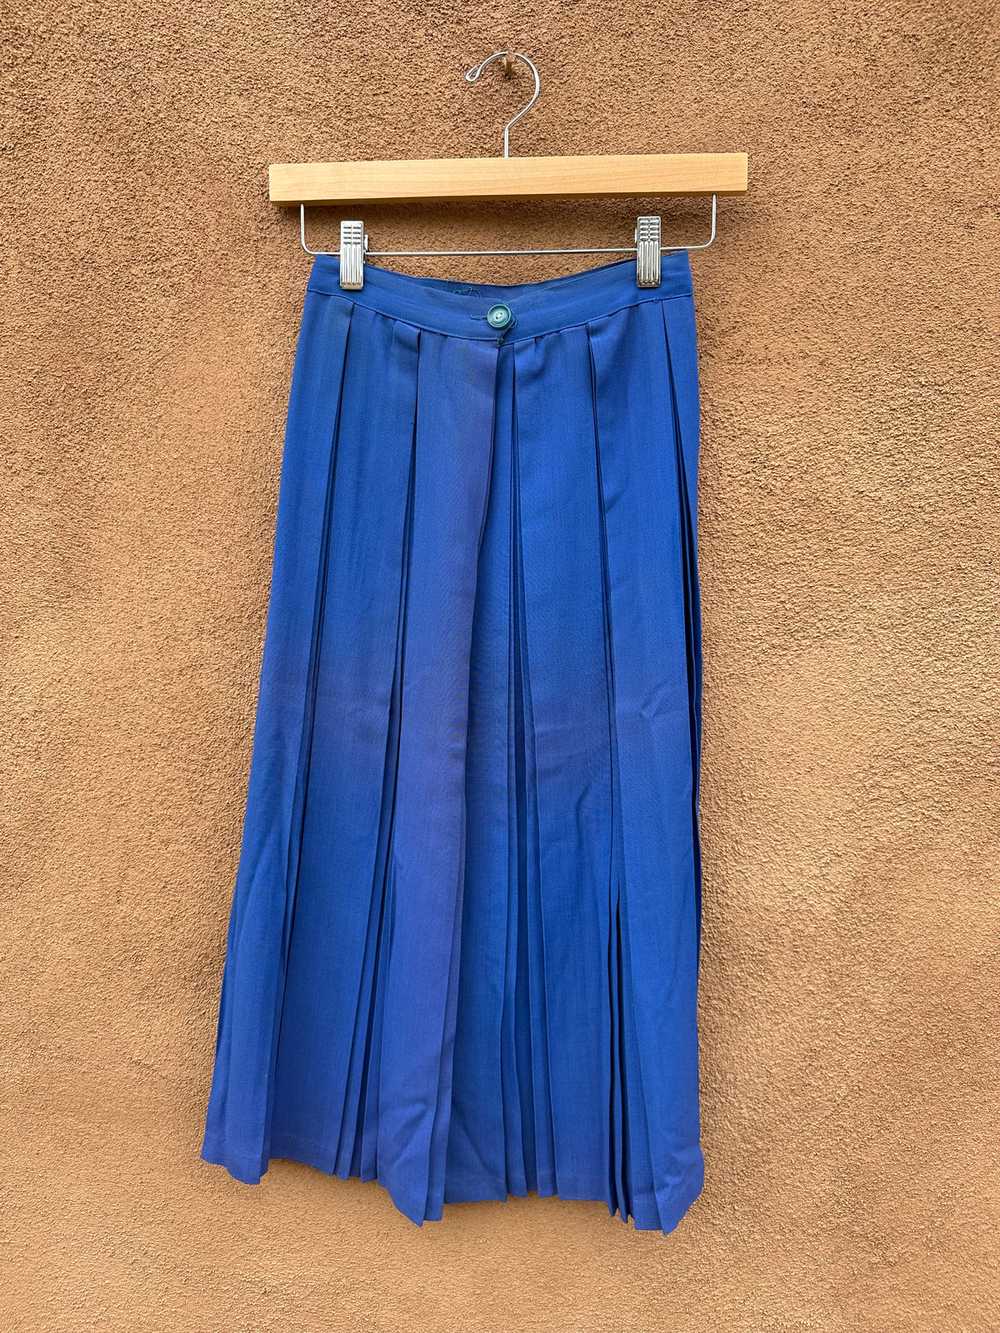 1970's Cornflower Blue Pleated Skirt, Union Made - image 3